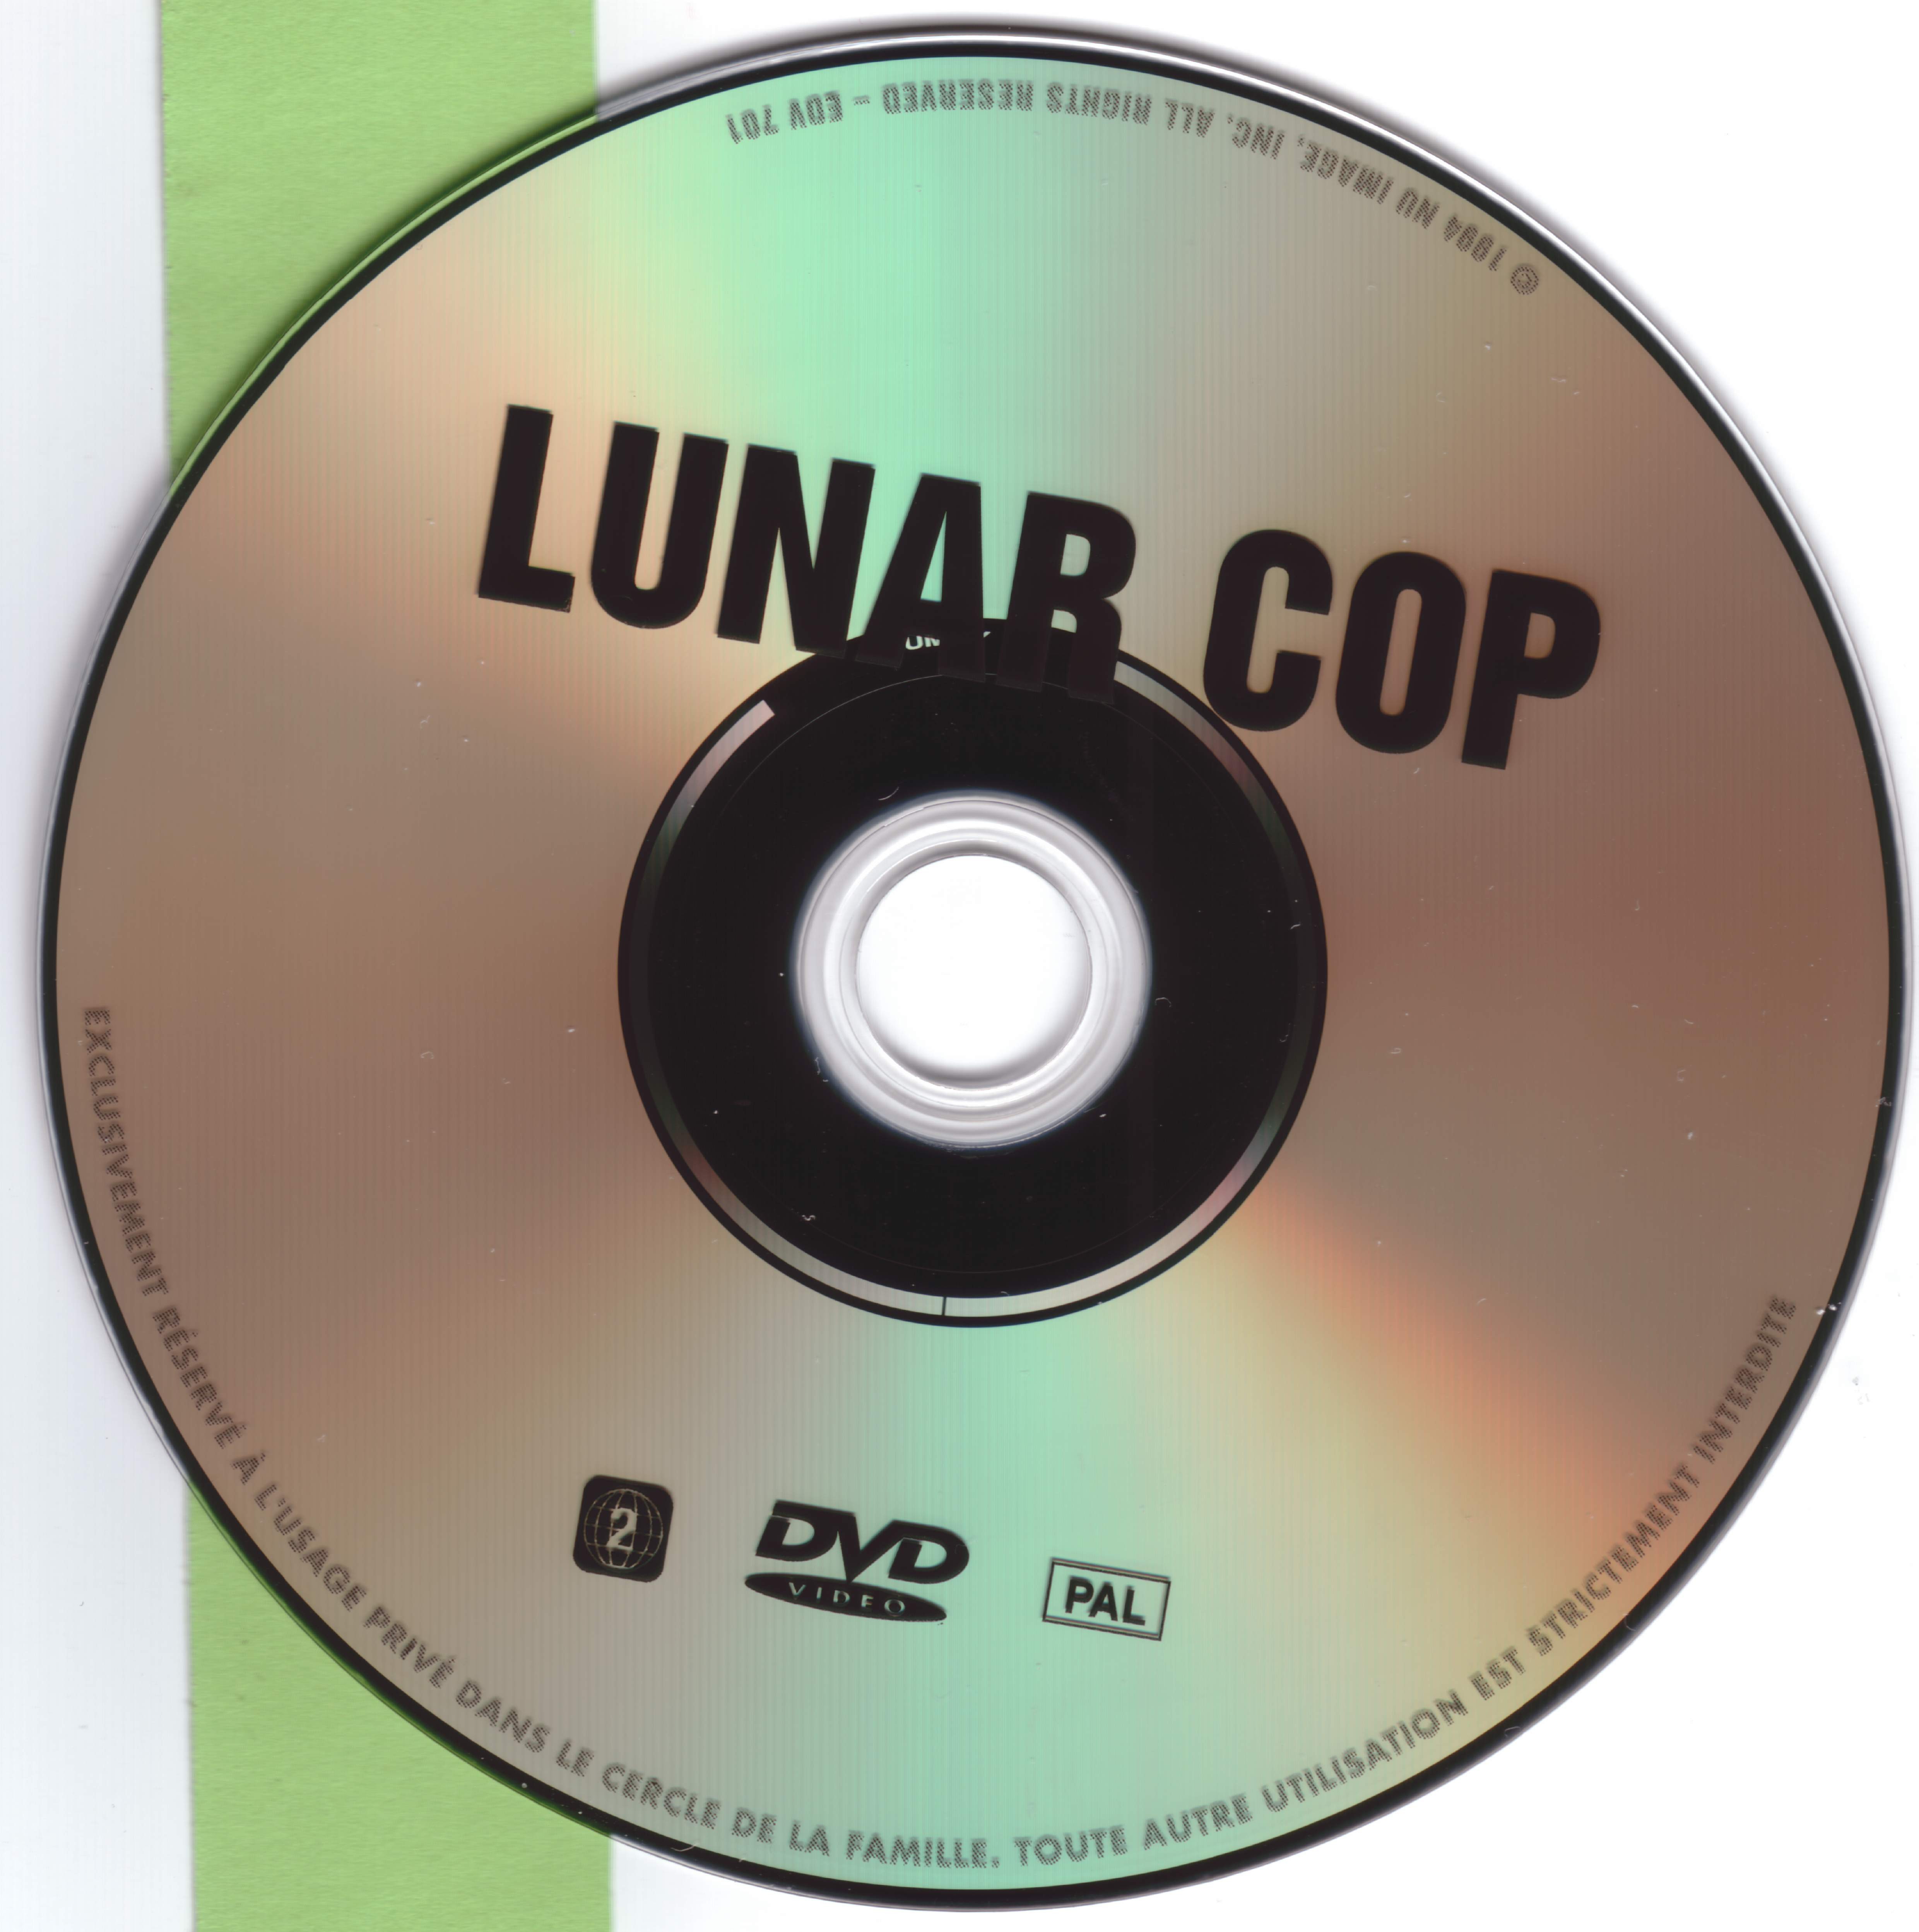 Lunar cop